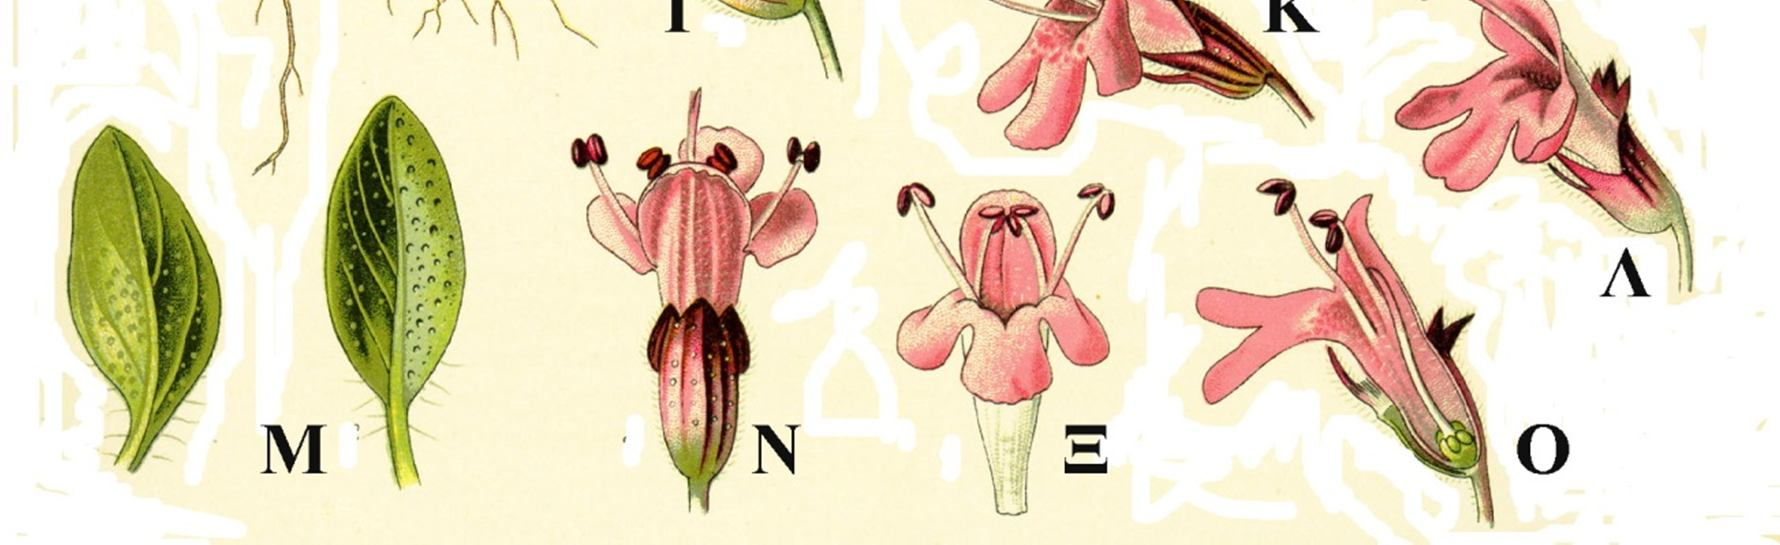 Thymus serpyllum: Α: απεικόνιση κλαδιού με φύλλα και άνθη τοποθετημένα κατά σπονδύλους, τα οποία συχνά συγκεντρώνονται στις κορυφές των κλαδιών, Β: ζυγόμορφος κάλυκας (το άνω χείλος με τρία τριγωνικά